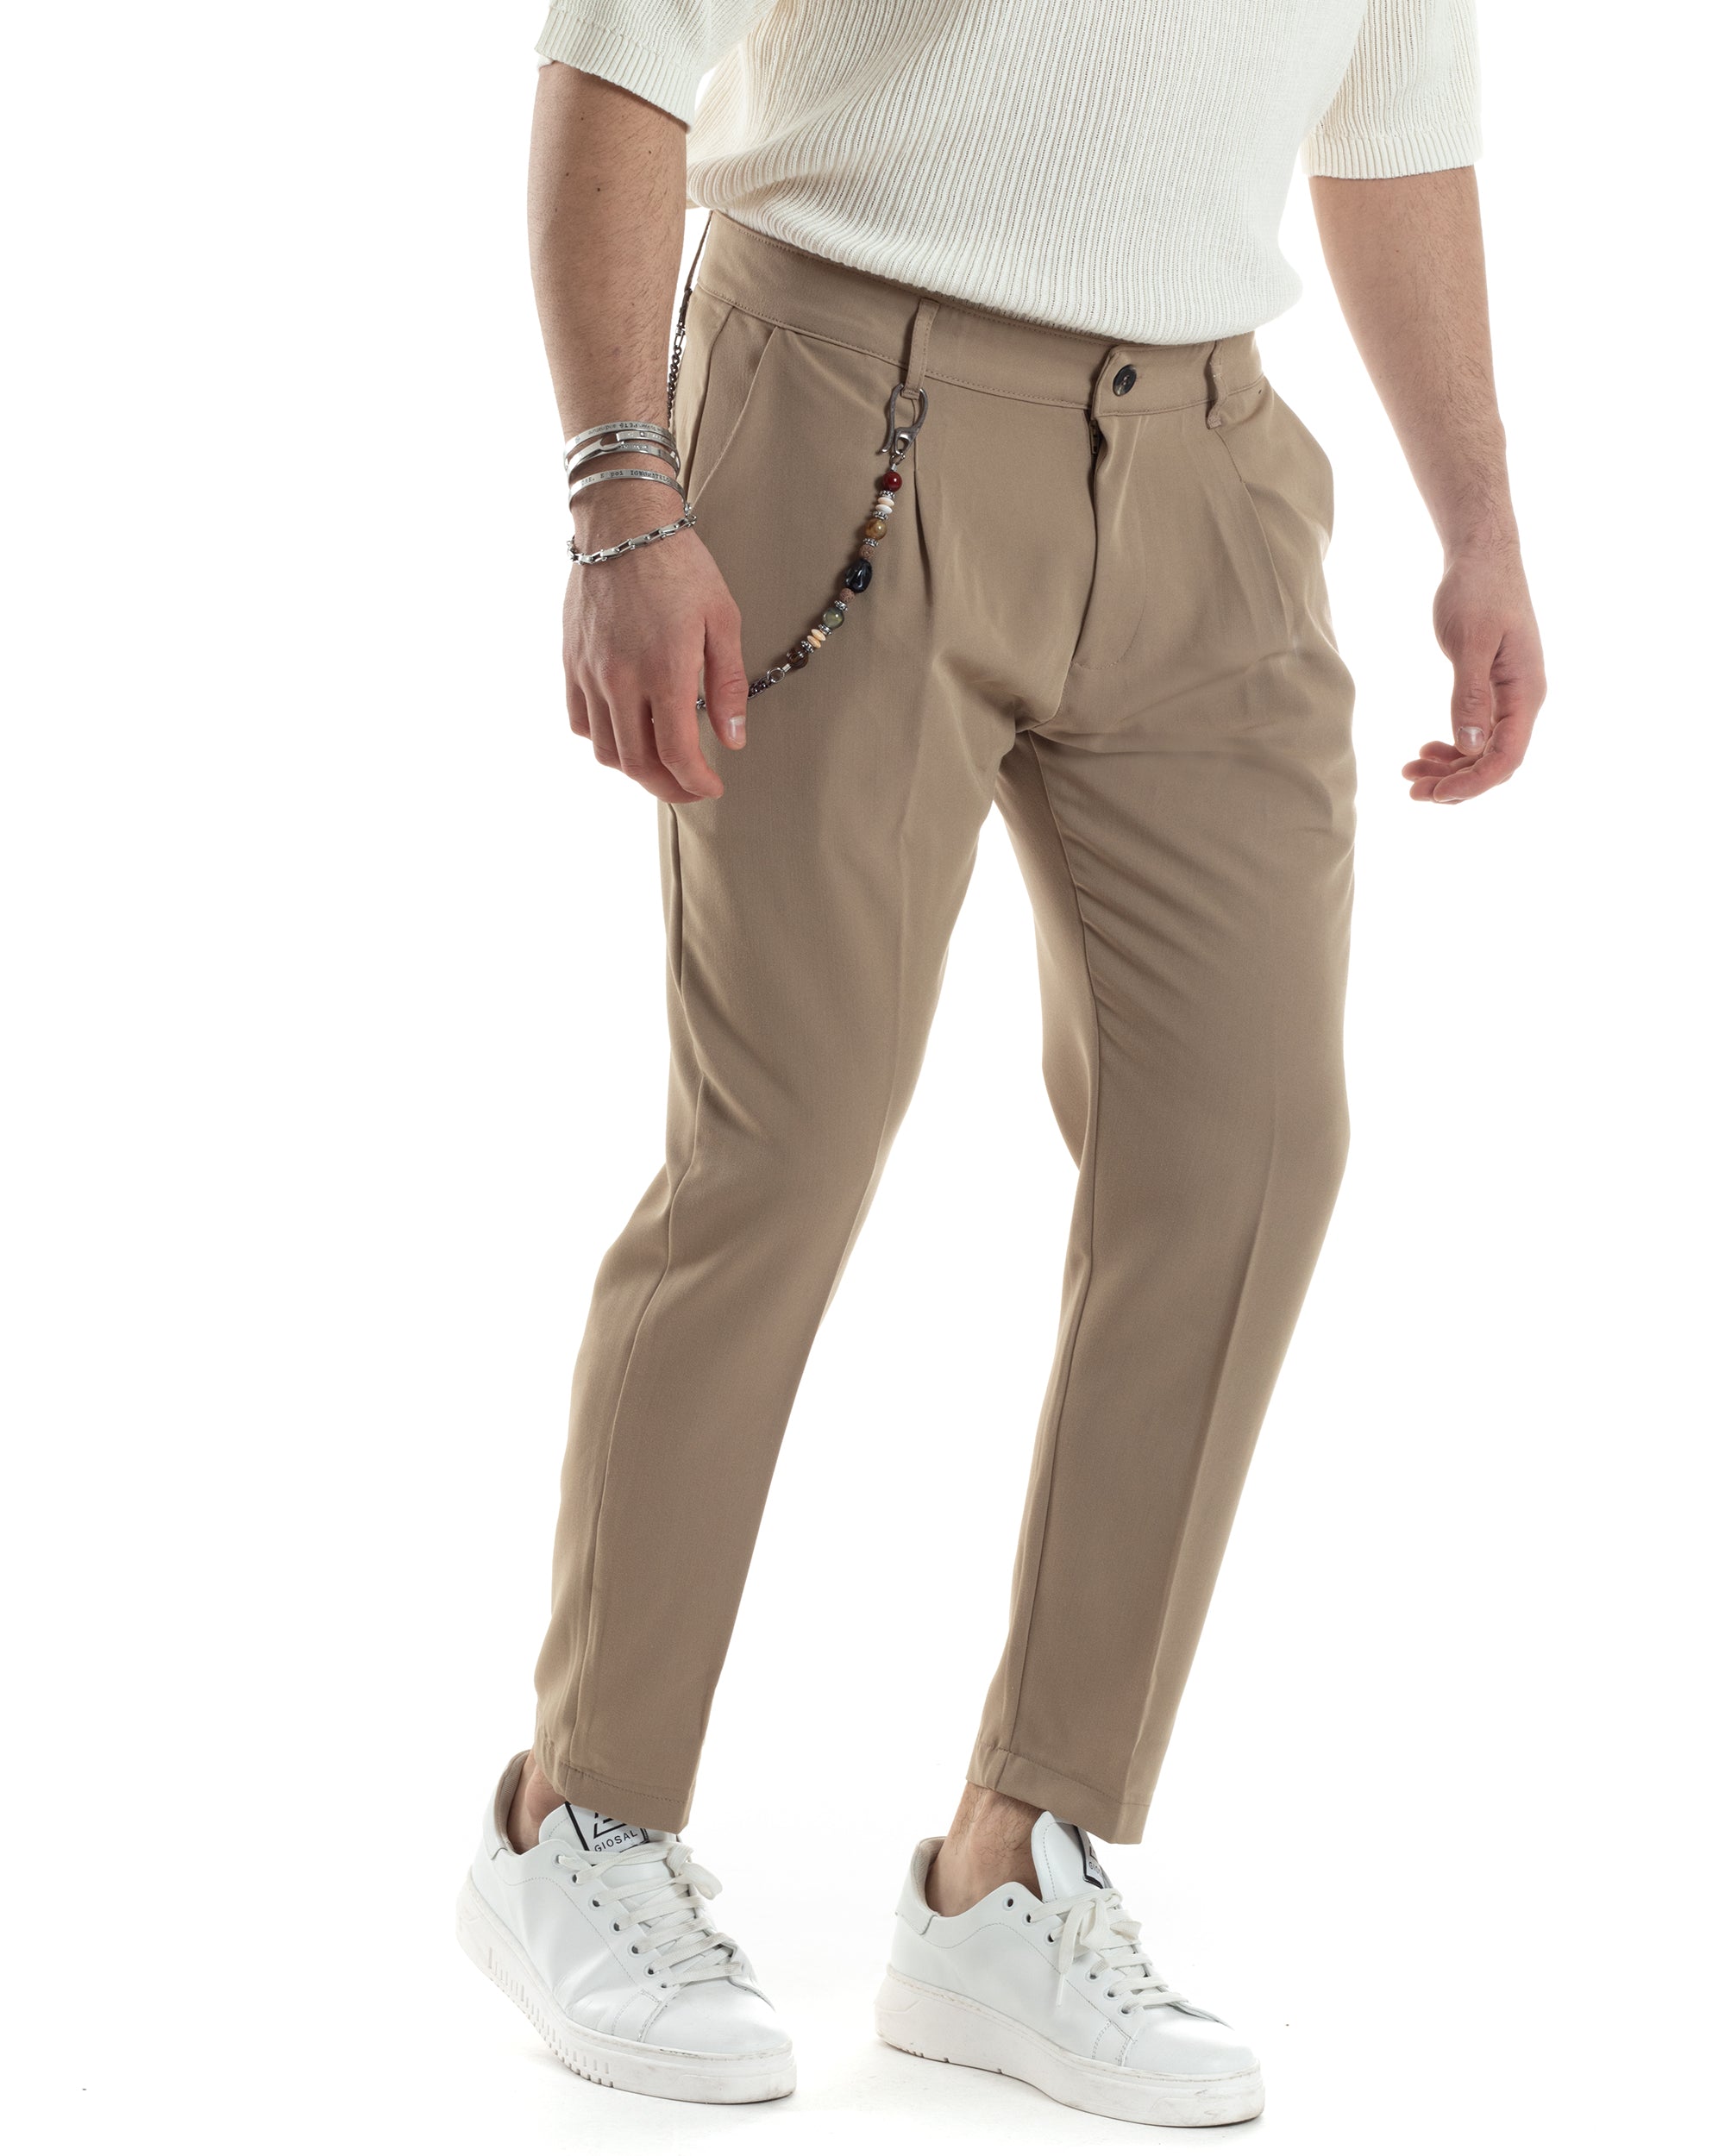 Pantaloni Uomo Tasca America Viscosa Beige Capri Casual Classico Pinces GIOSAL-P6046A